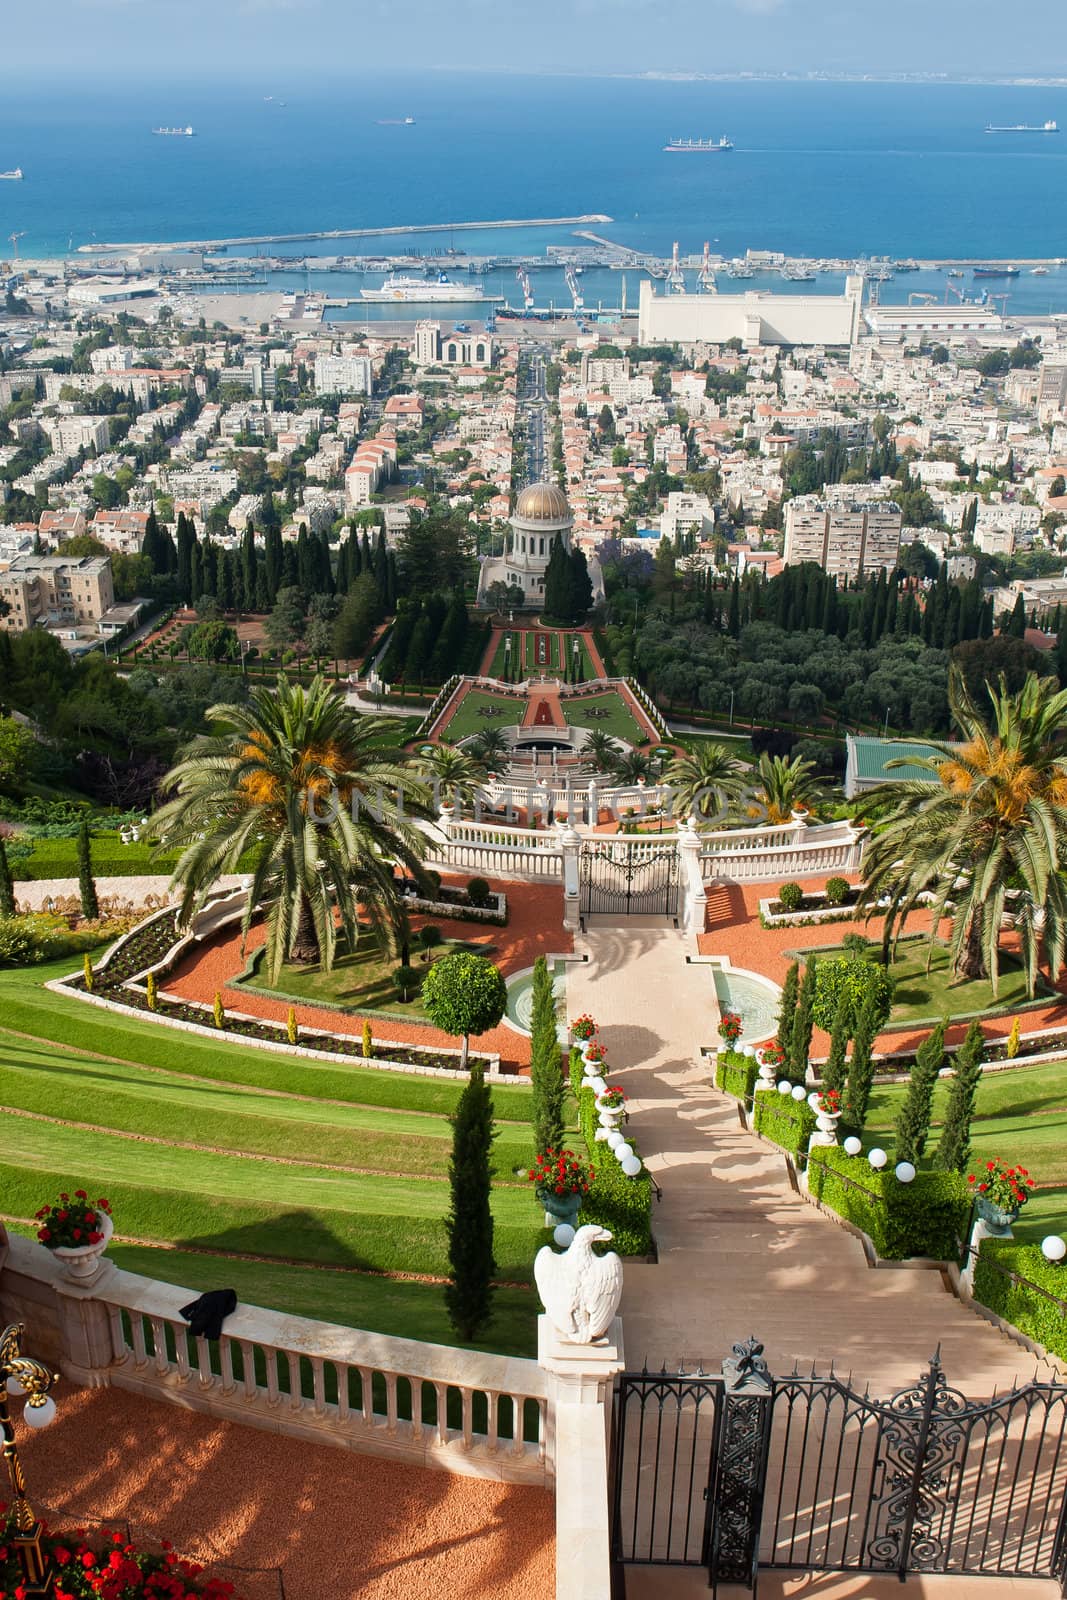 The Bahai Gardens in Haifa Israel by Ronyzmbow